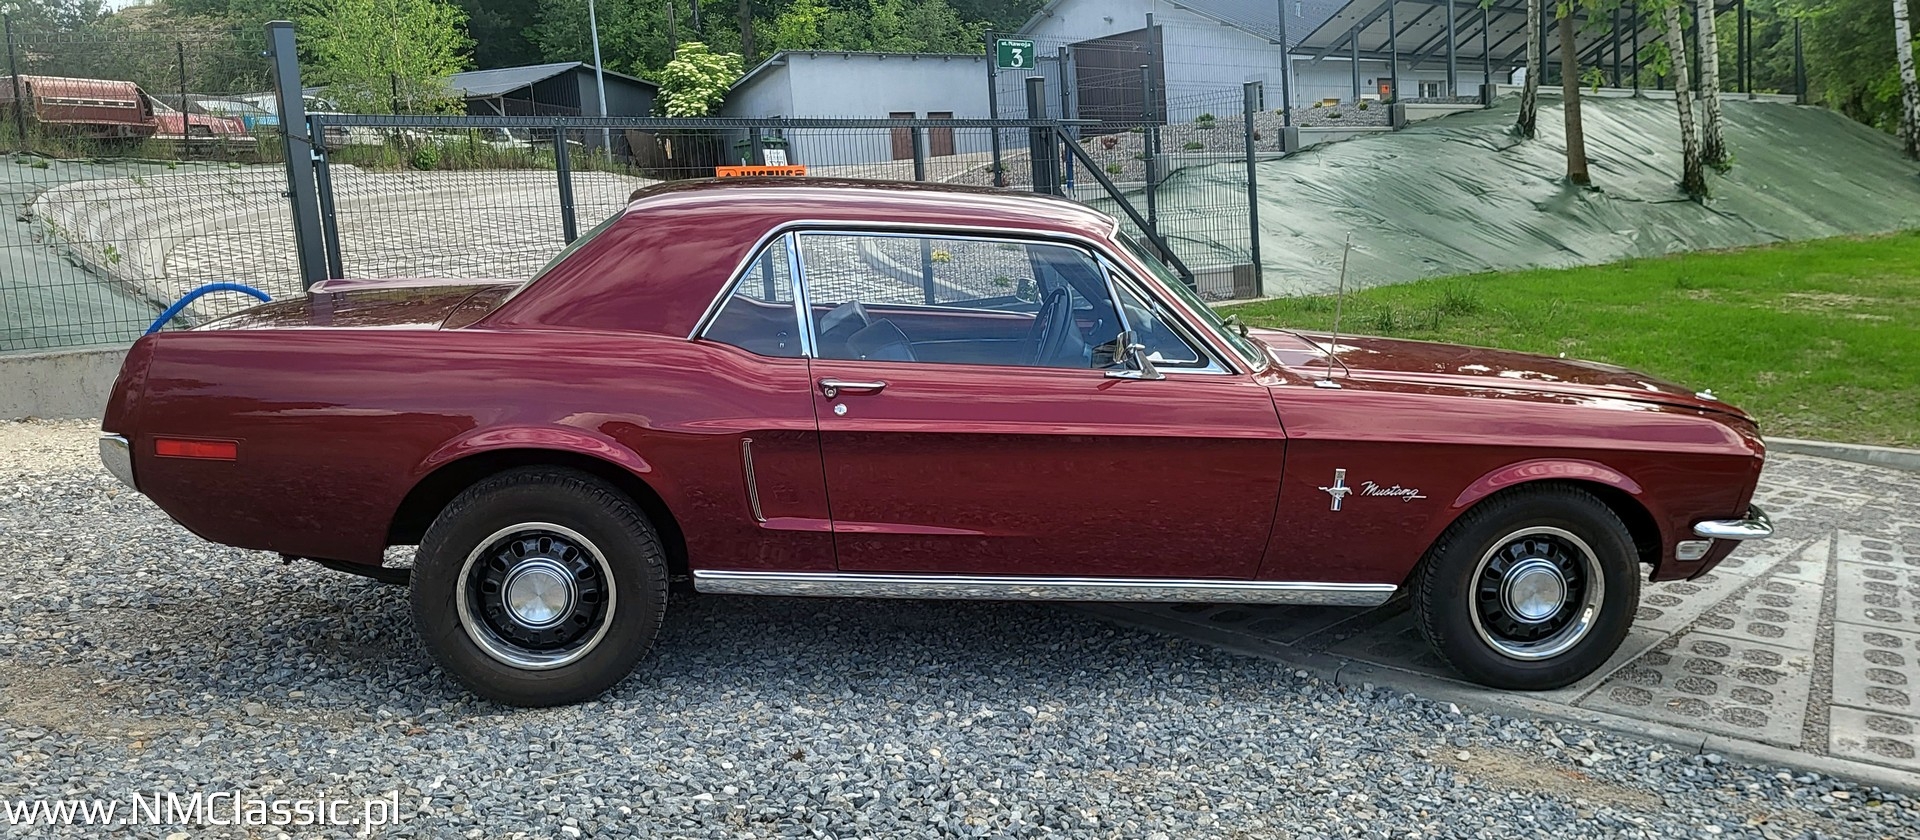 1_Mustang1968-06-23-10